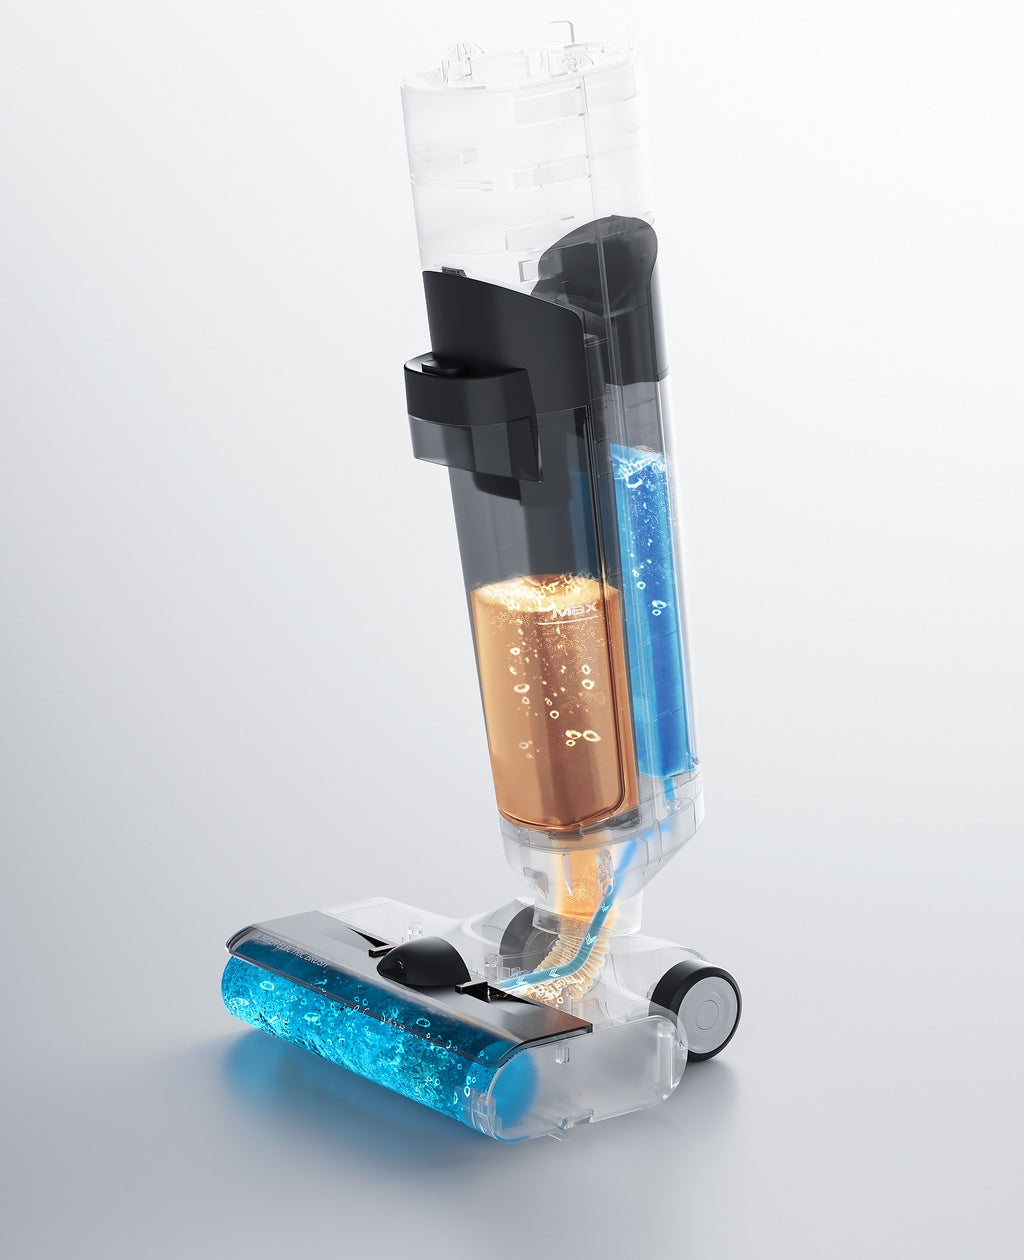 ROIDMI Smart Cordless Wet Dry Vacuum Cleaner NEO